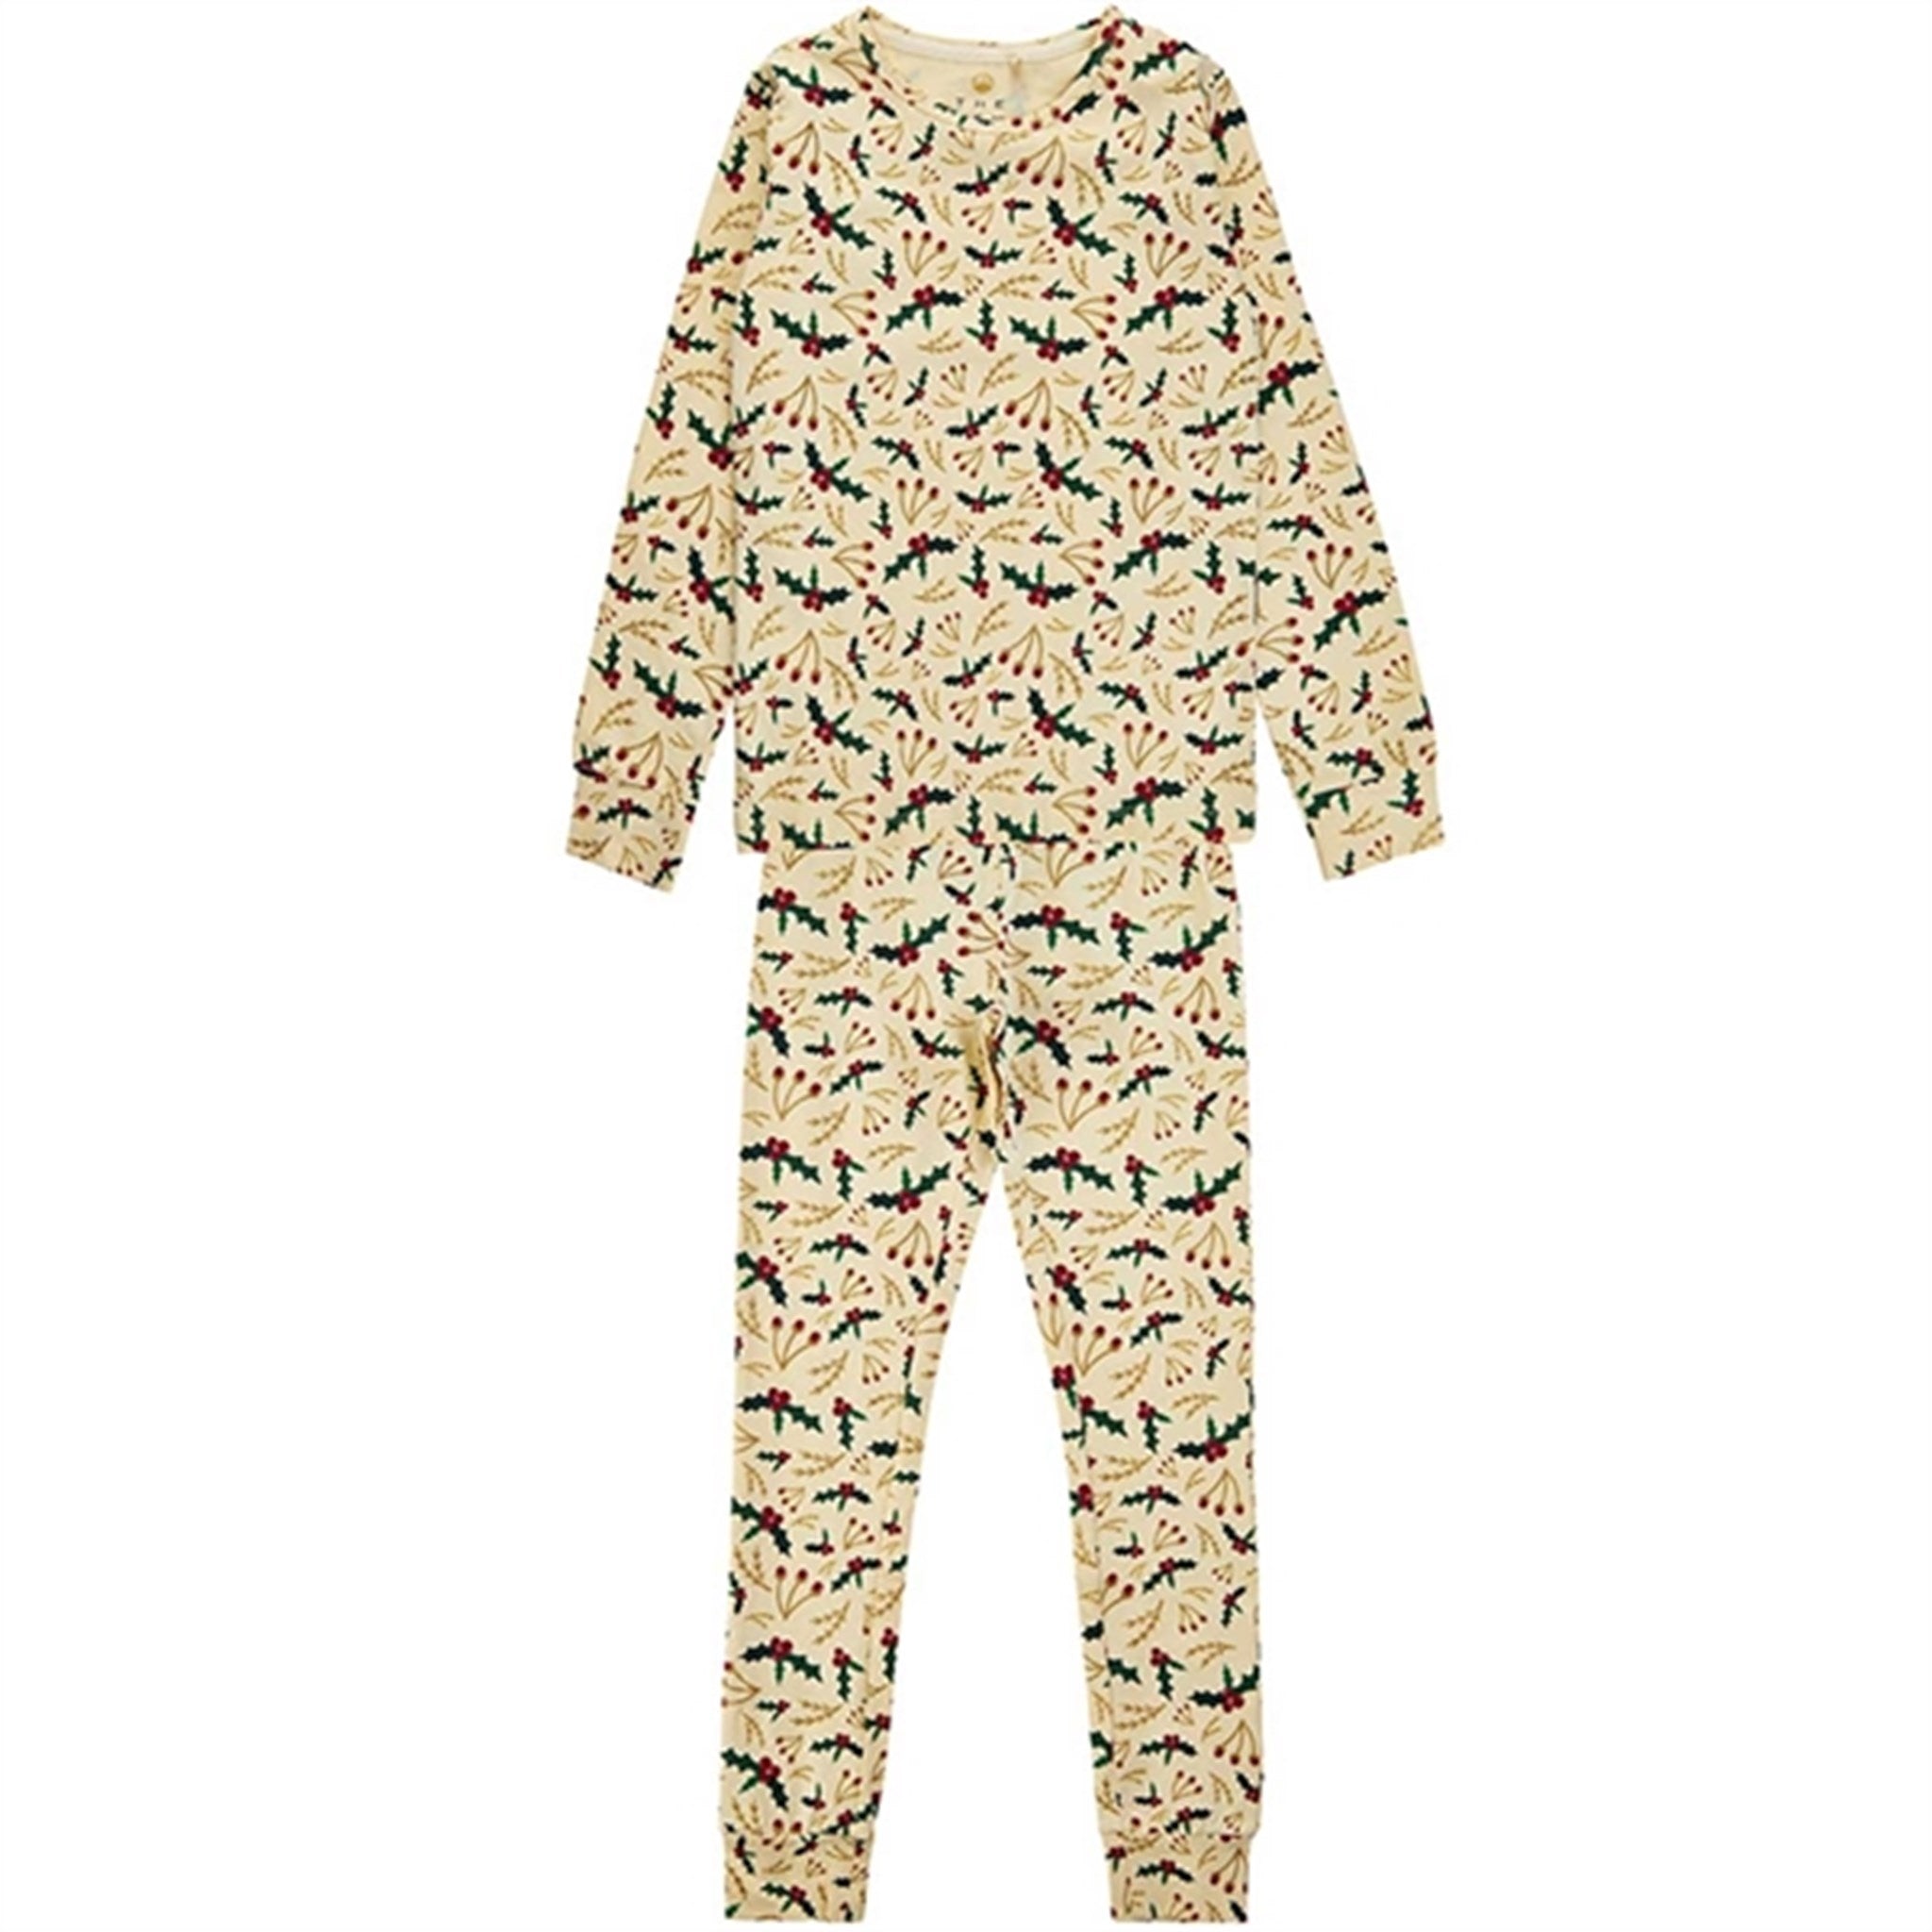 The New Mistel AOP Holiday Pyjamas